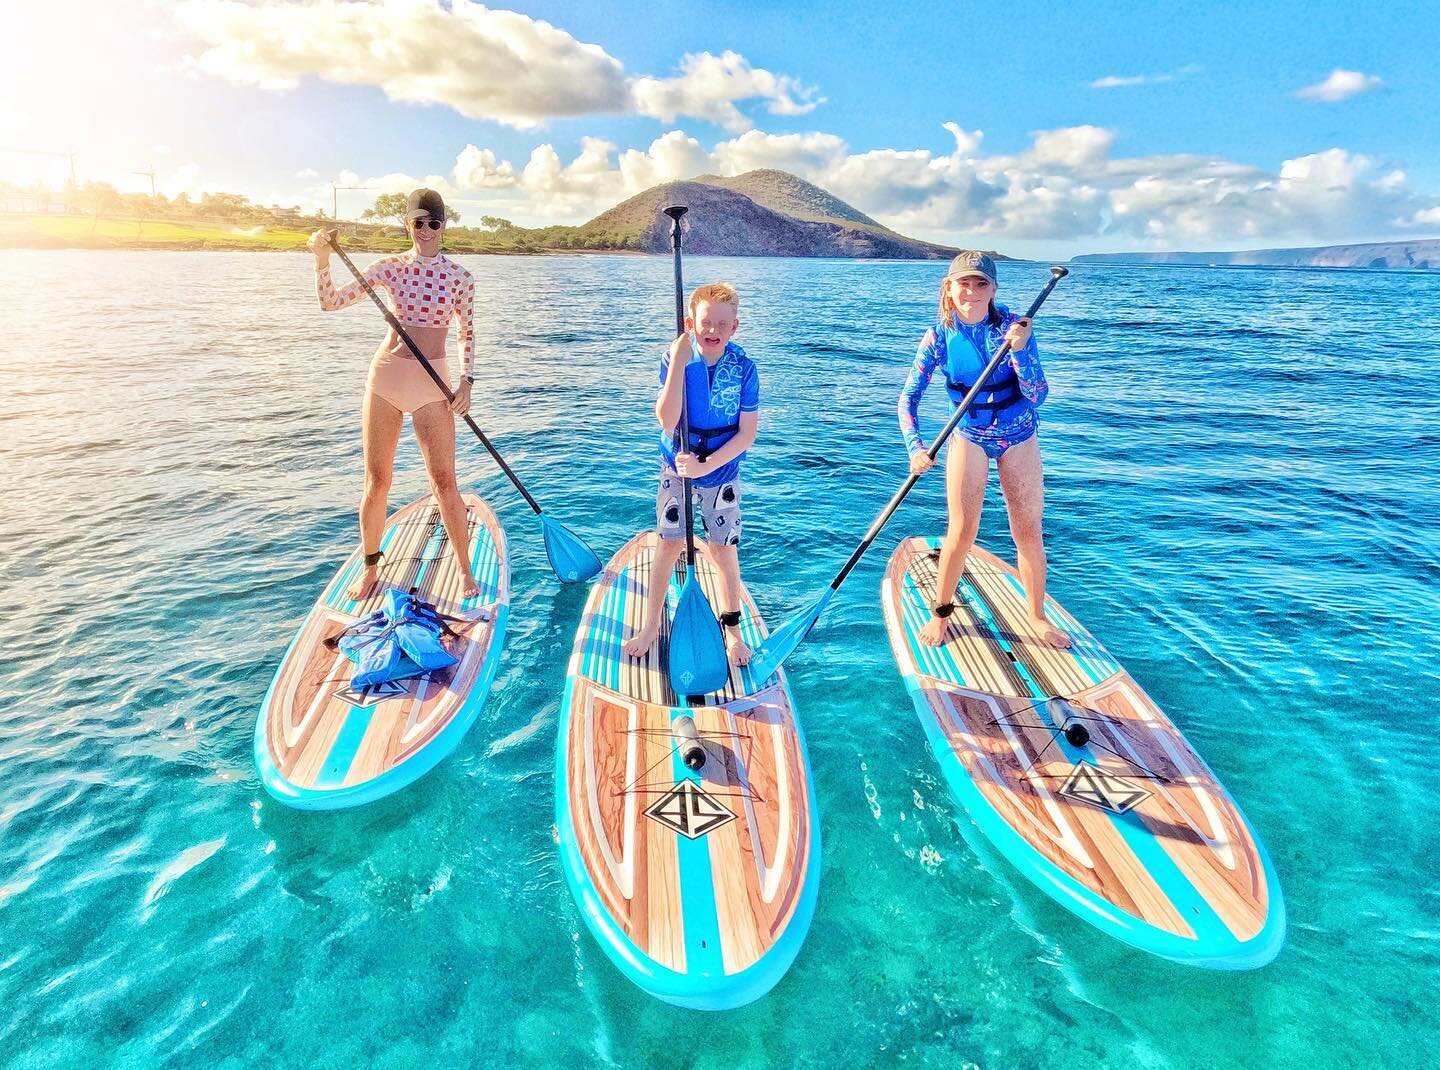 😎💦 Fun for the whole family! Such a blast taking the King family on a SUP &amp; Snorkel adventure along our coastline. A whole crew of incredible paddlers! 

#maui #mauiactivities #mauihawaii #hawaii #mauiactivities #mauivacation #wailea #mauibeach